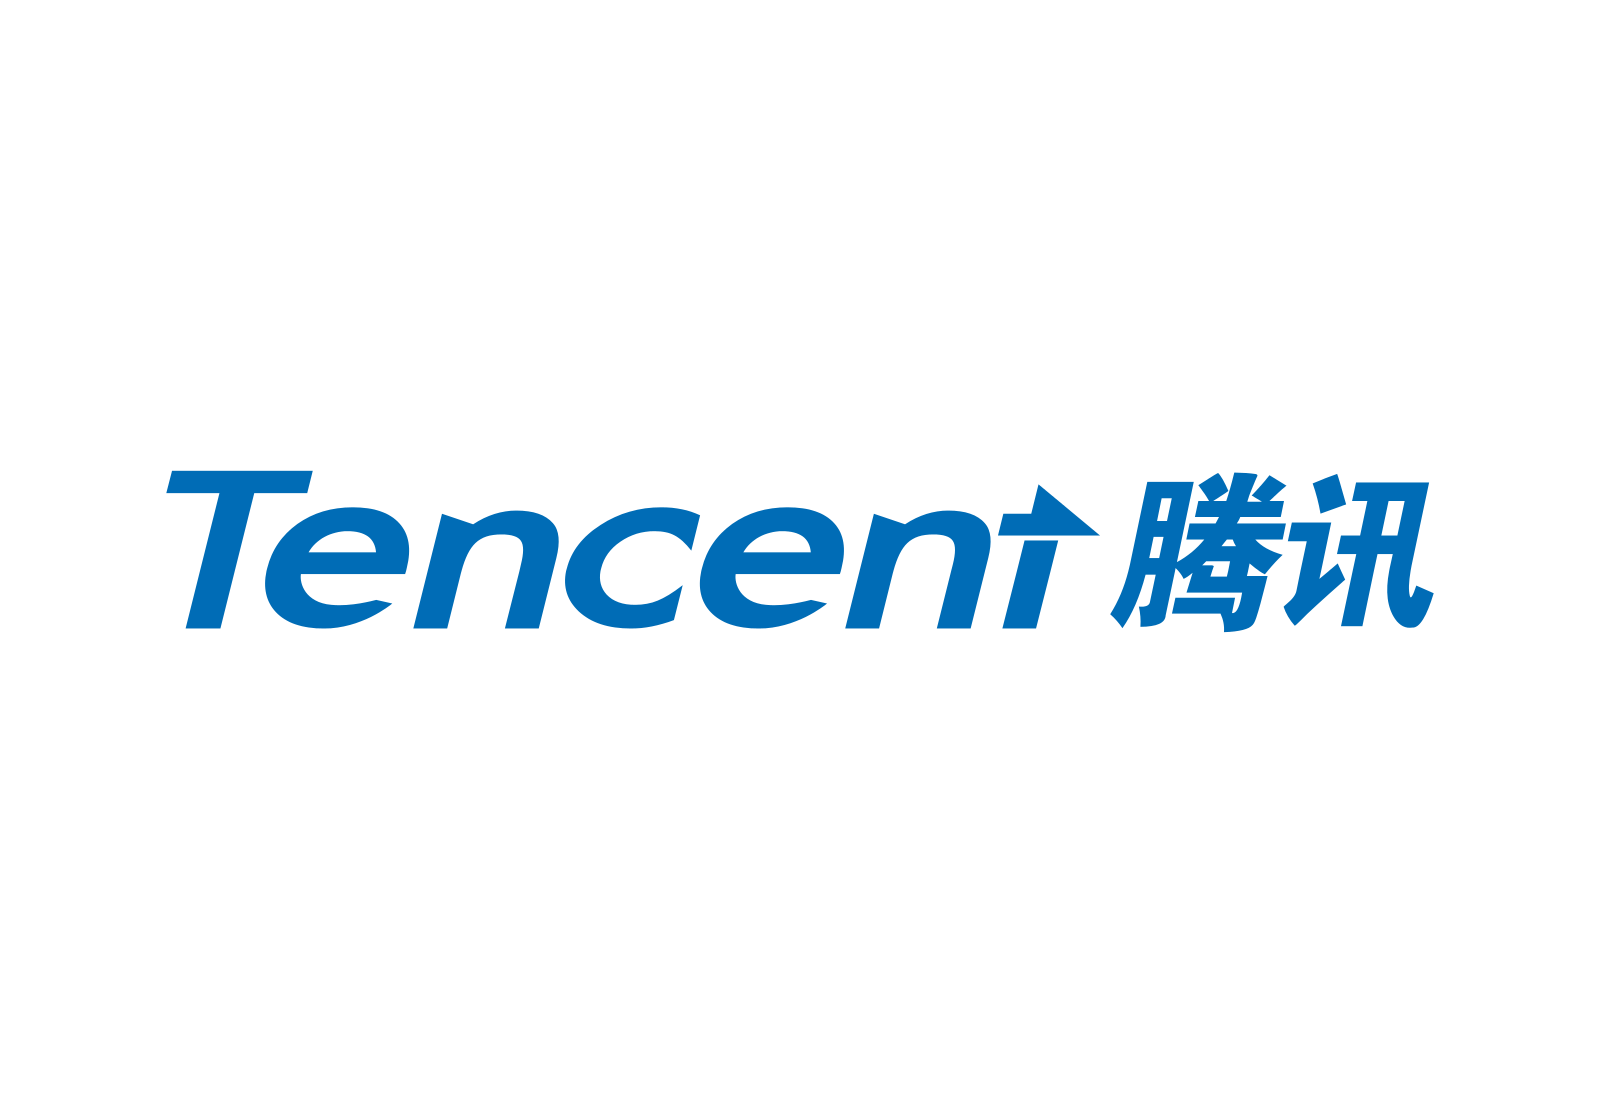 Tencent New Logo - Tencent Logo PNG Transparent Tencent Logo.PNG Images. | PlusPNG